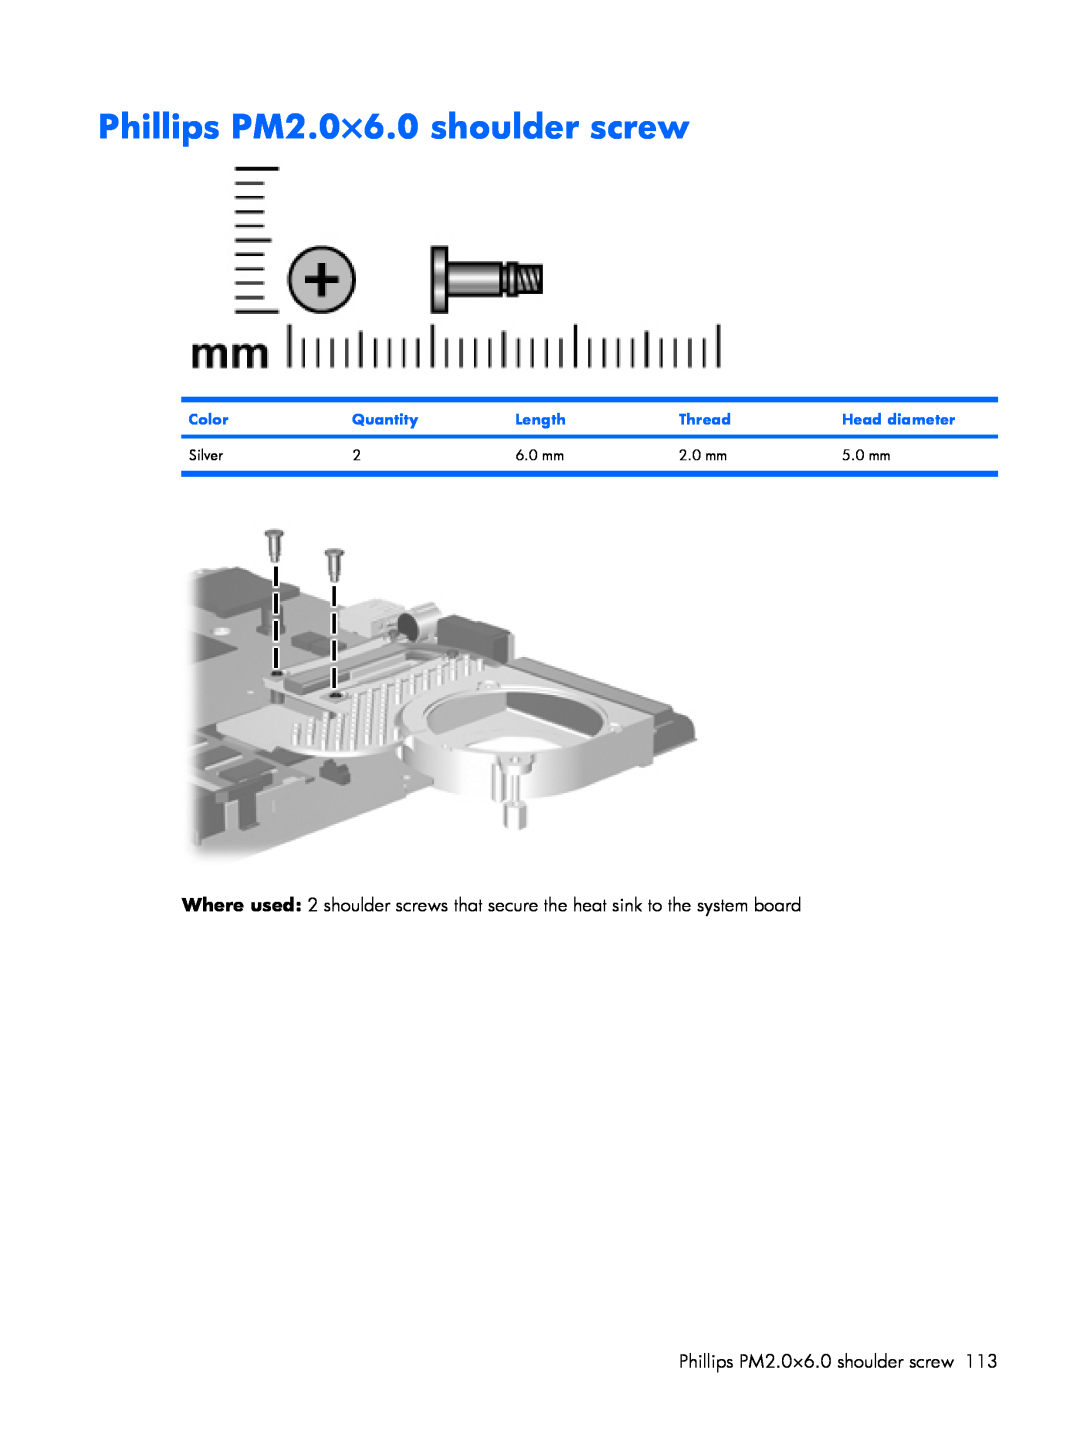 HP B1248TU manual Phillips PM2.0×6.0 shoulder screw, Color, Quantity, Length, Thread, Head diameter, Silver, 6.0 mm, 2.0 mm 